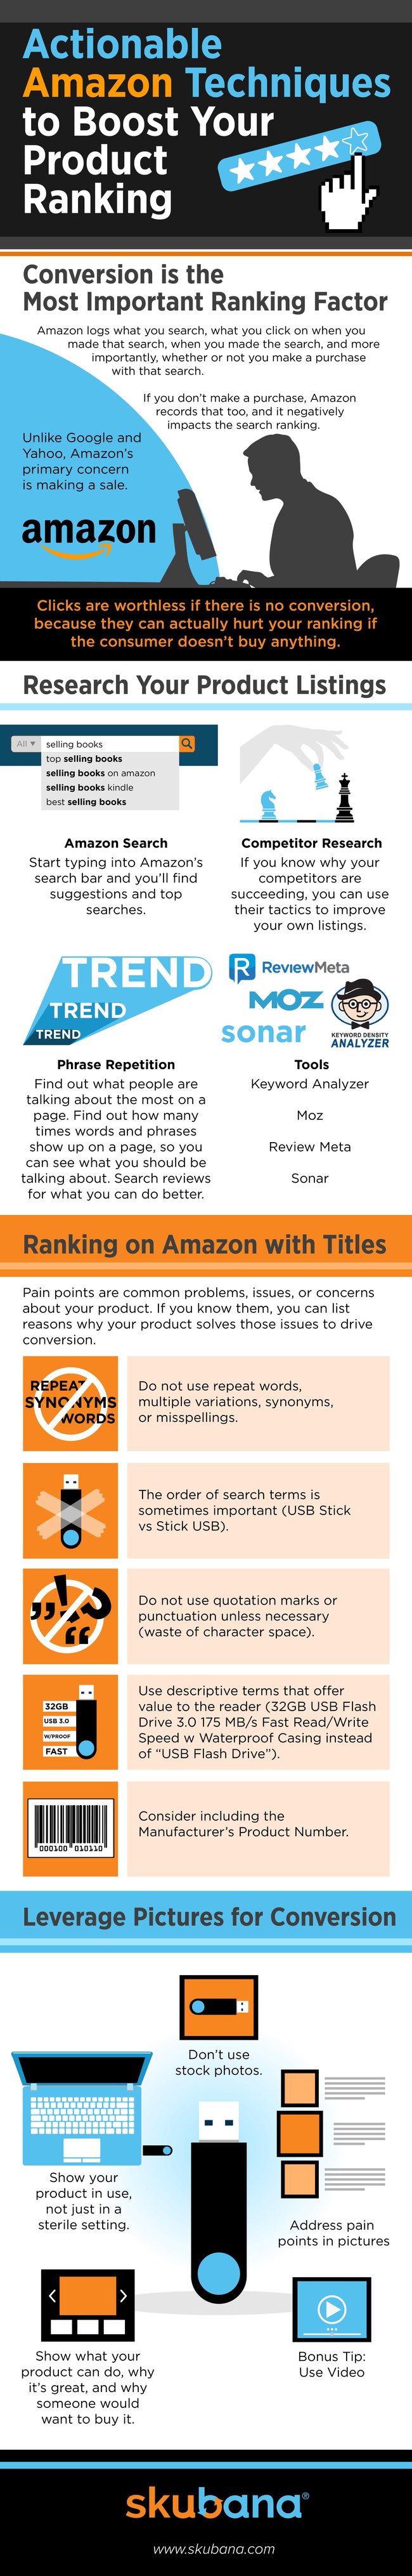 Actionable-Amazon-Techniques-Infographic-1 2